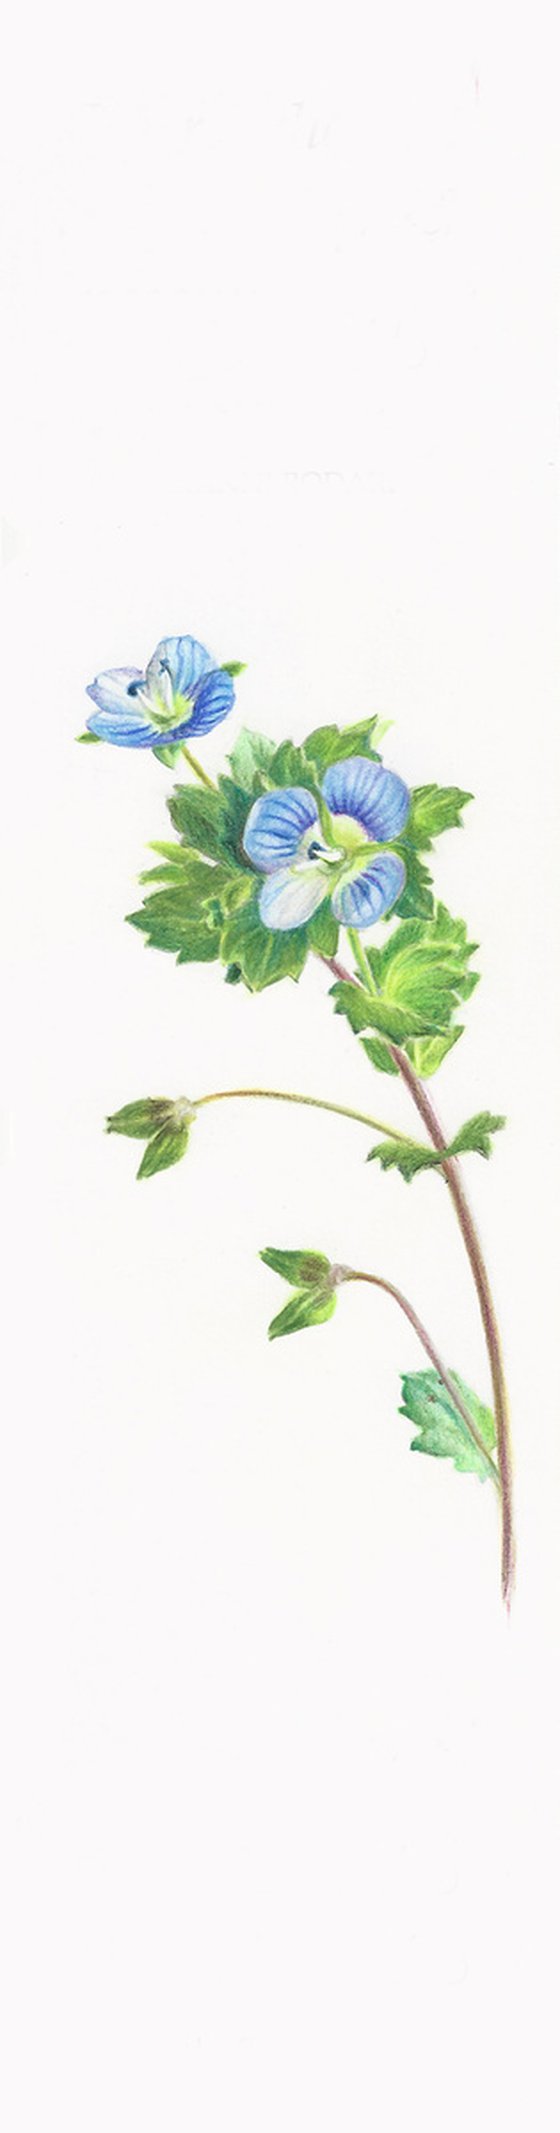 Birdeye Speedwell - from my Wildflowers Bookmarks Collection